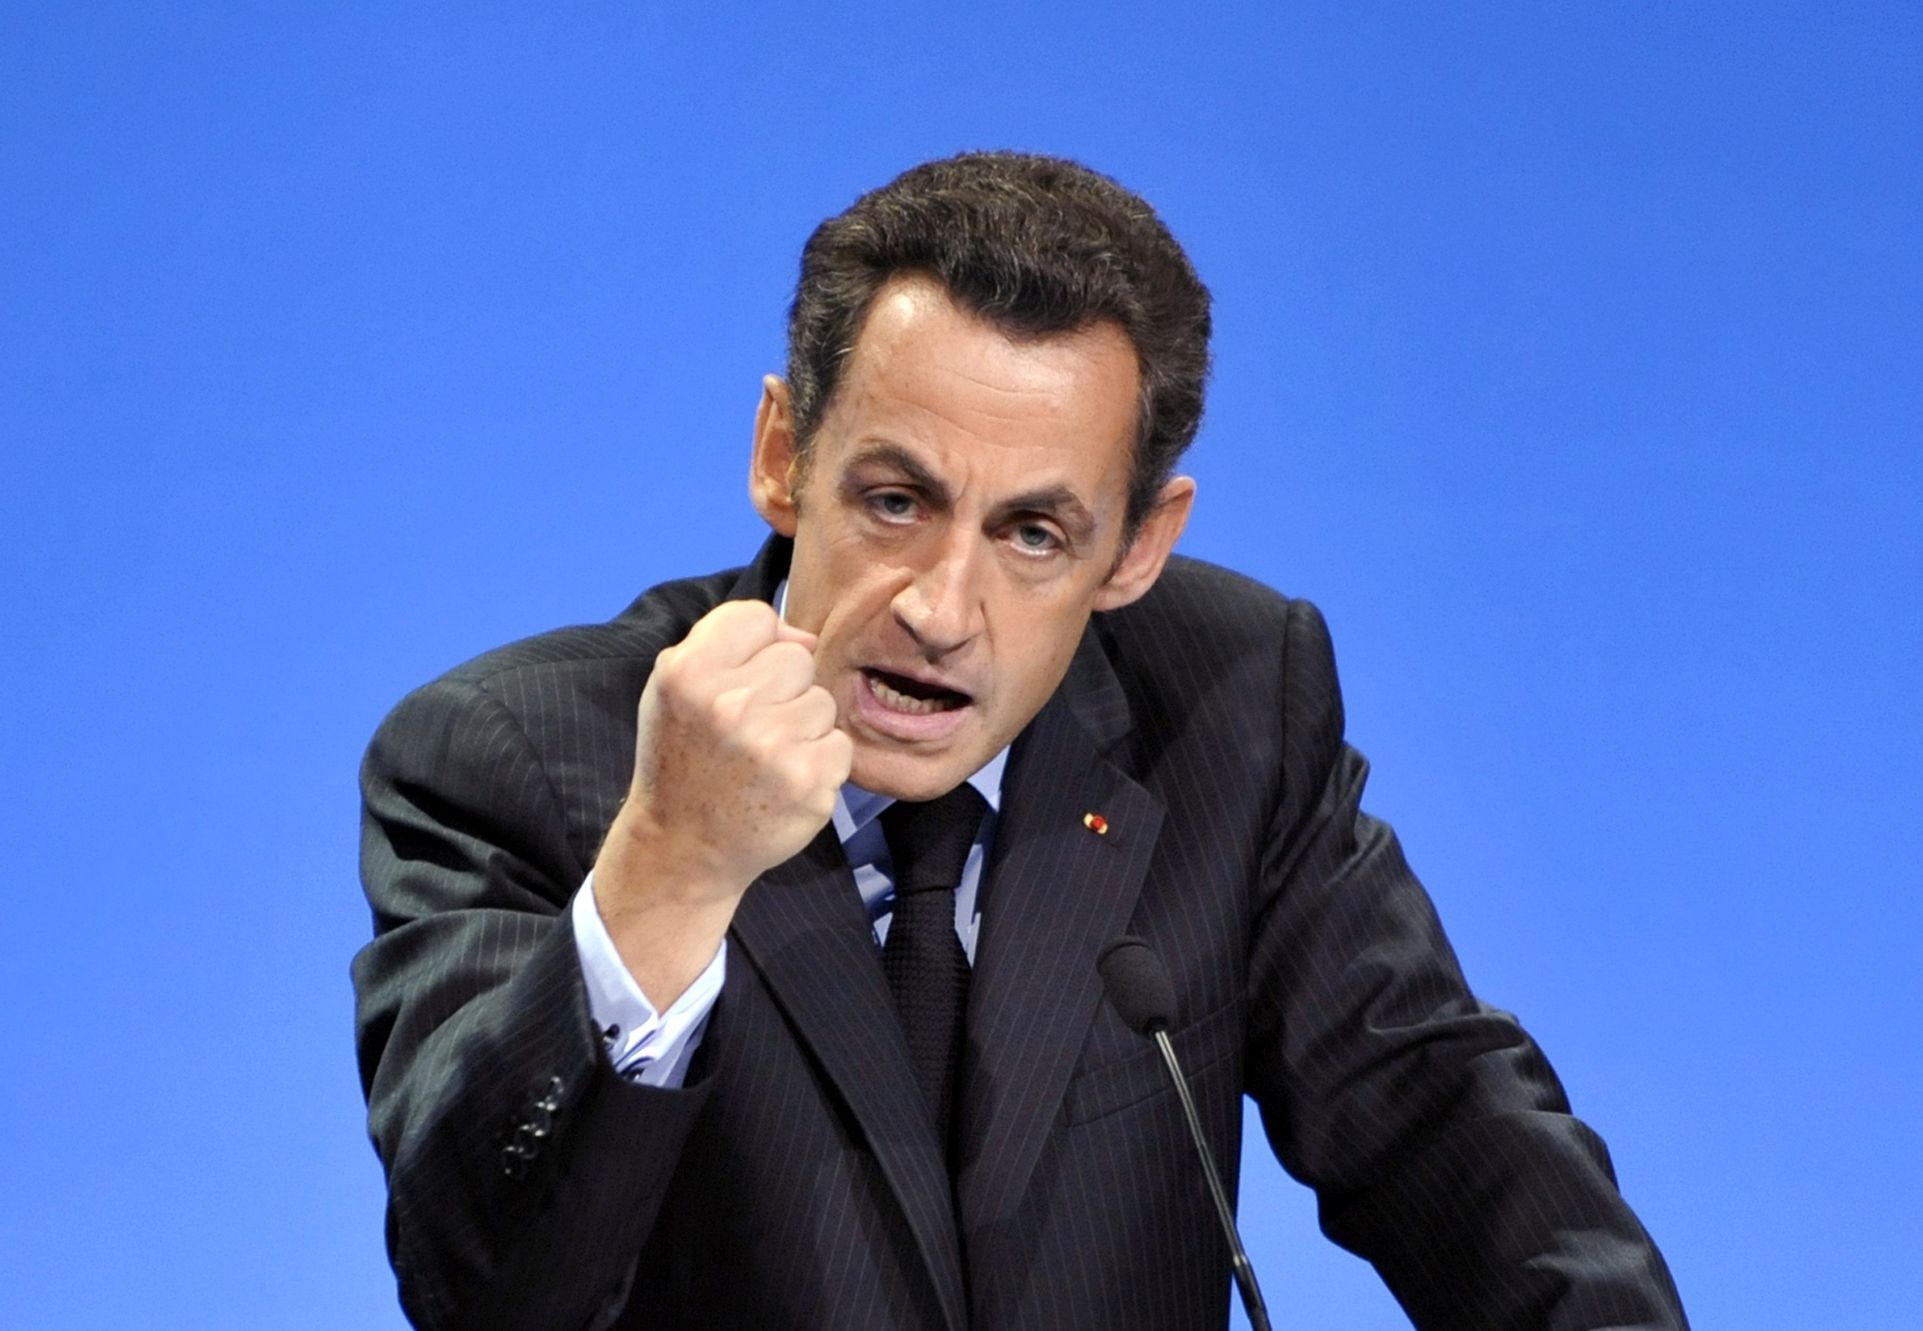 Nicolas Sarkozy (říjen 2008)